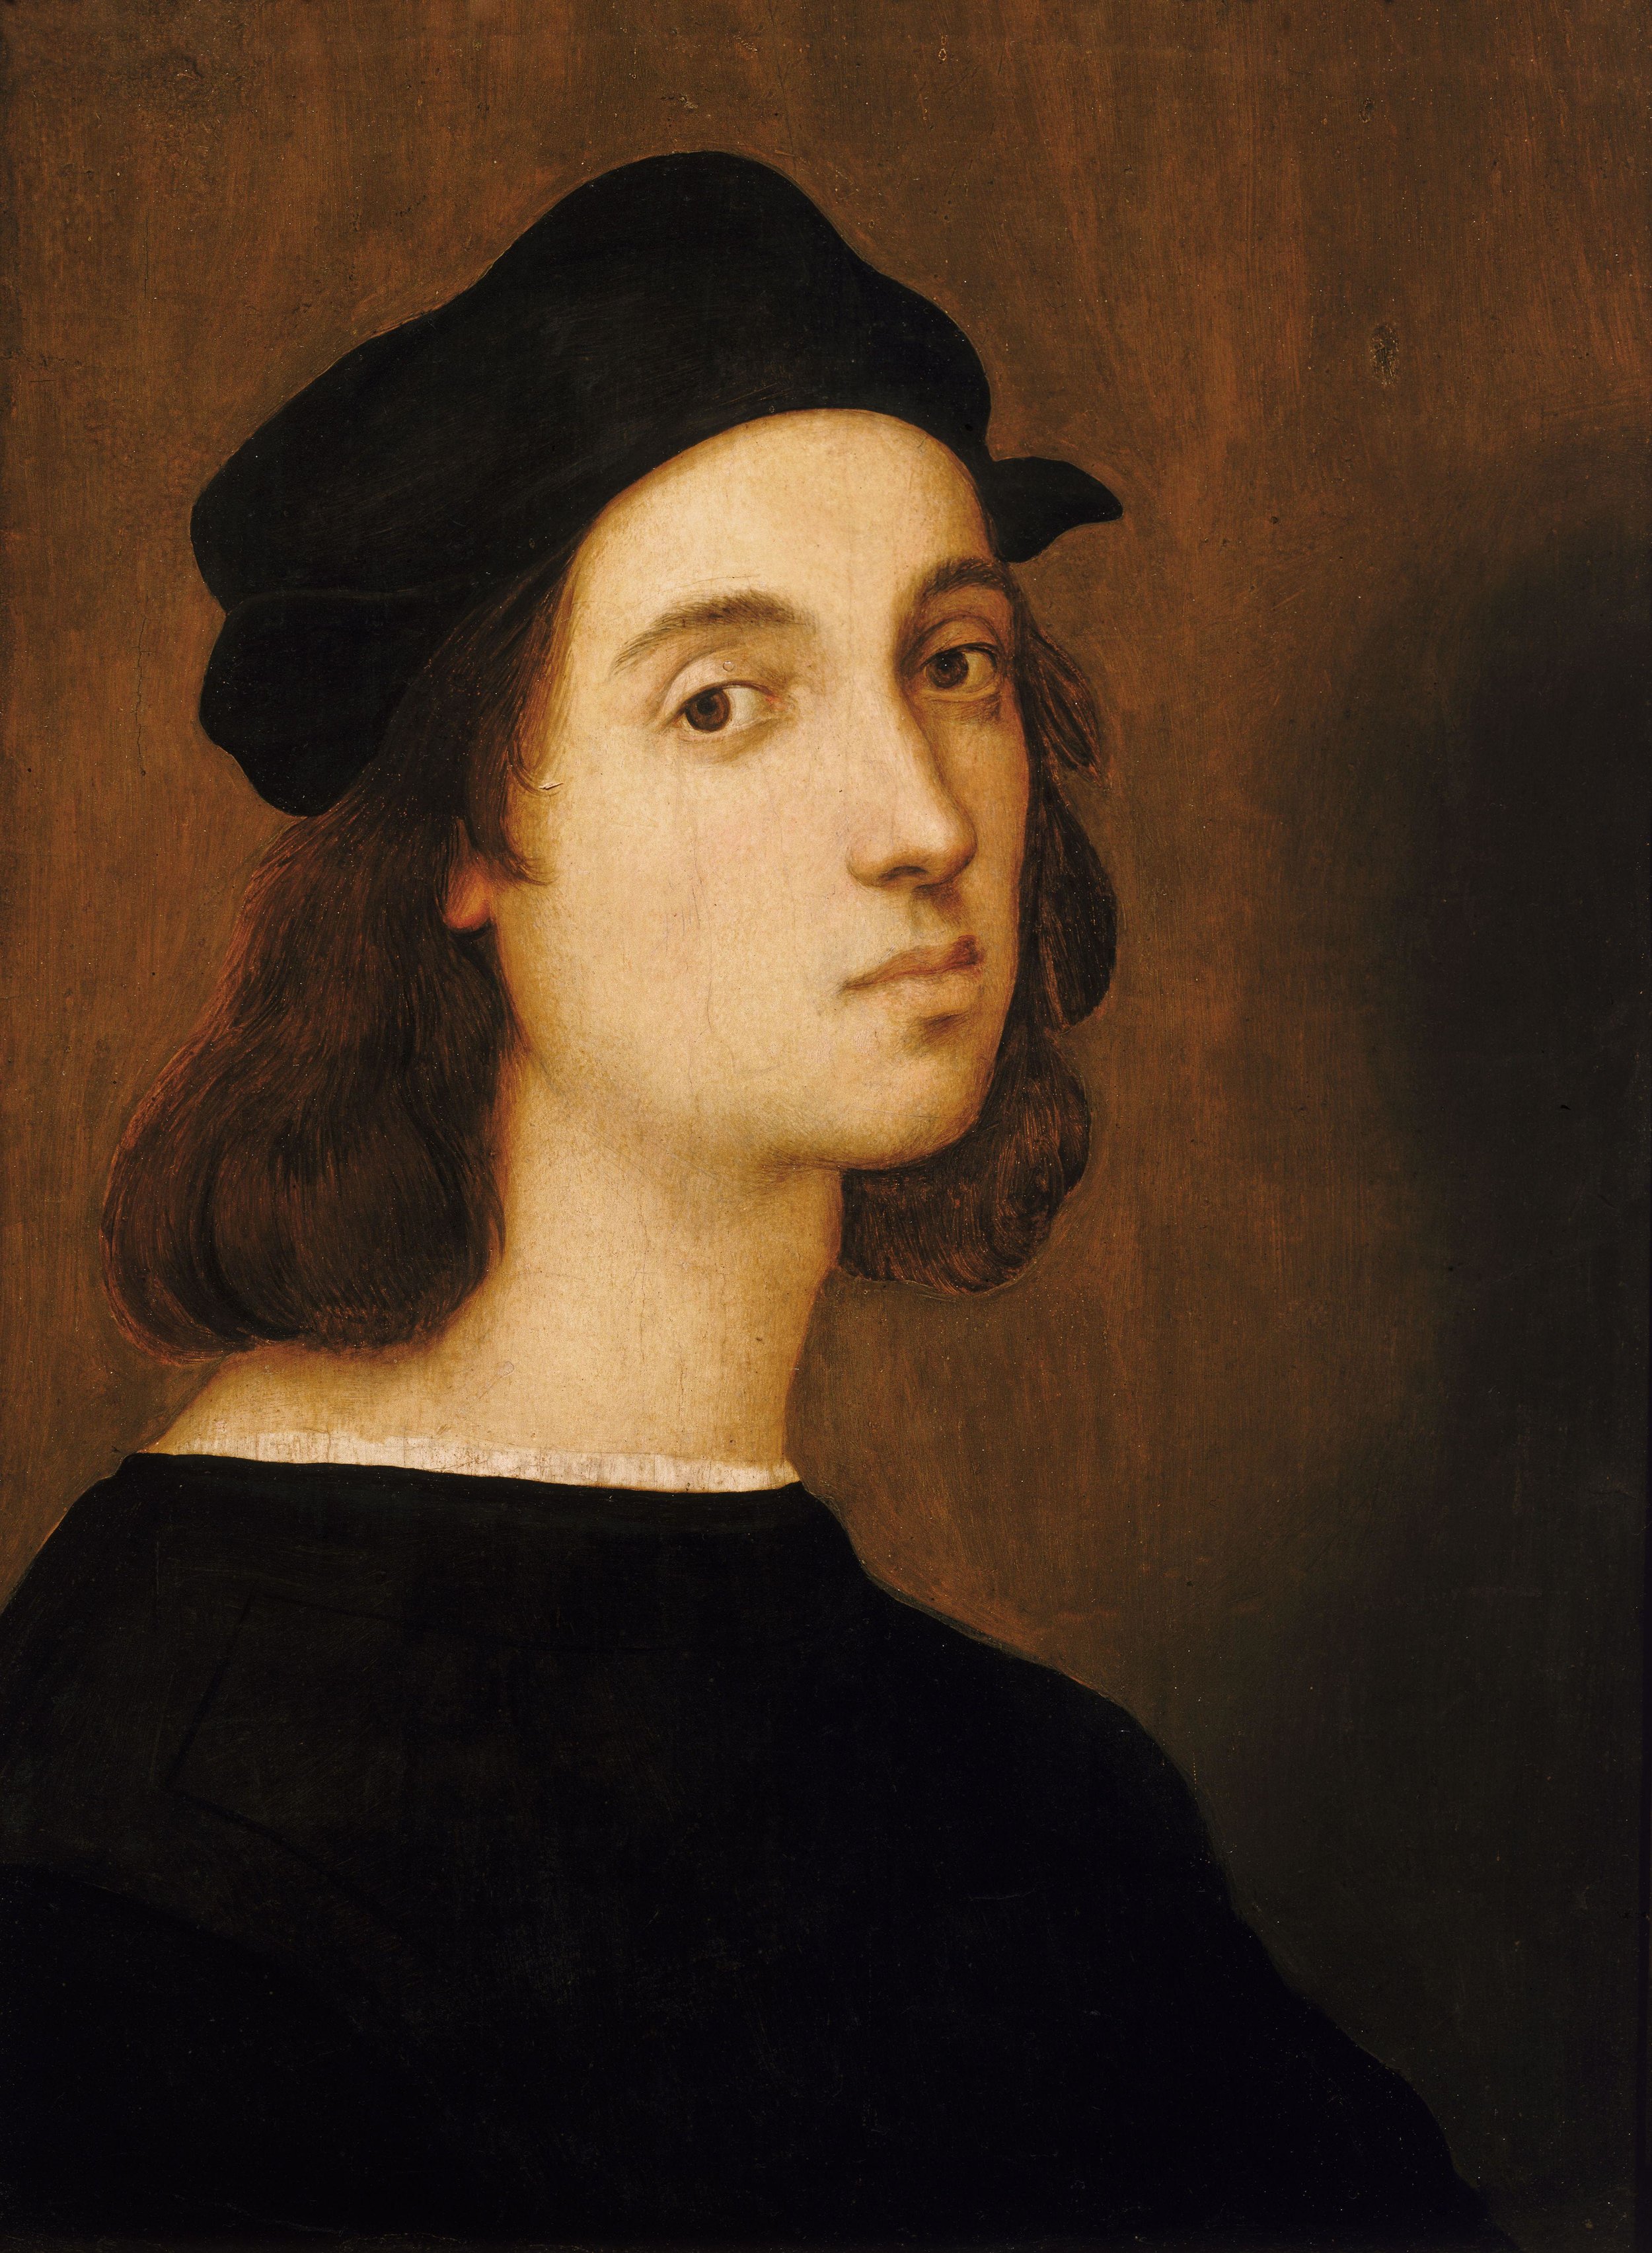 Raphael, Self-Portrait, 1504–1506